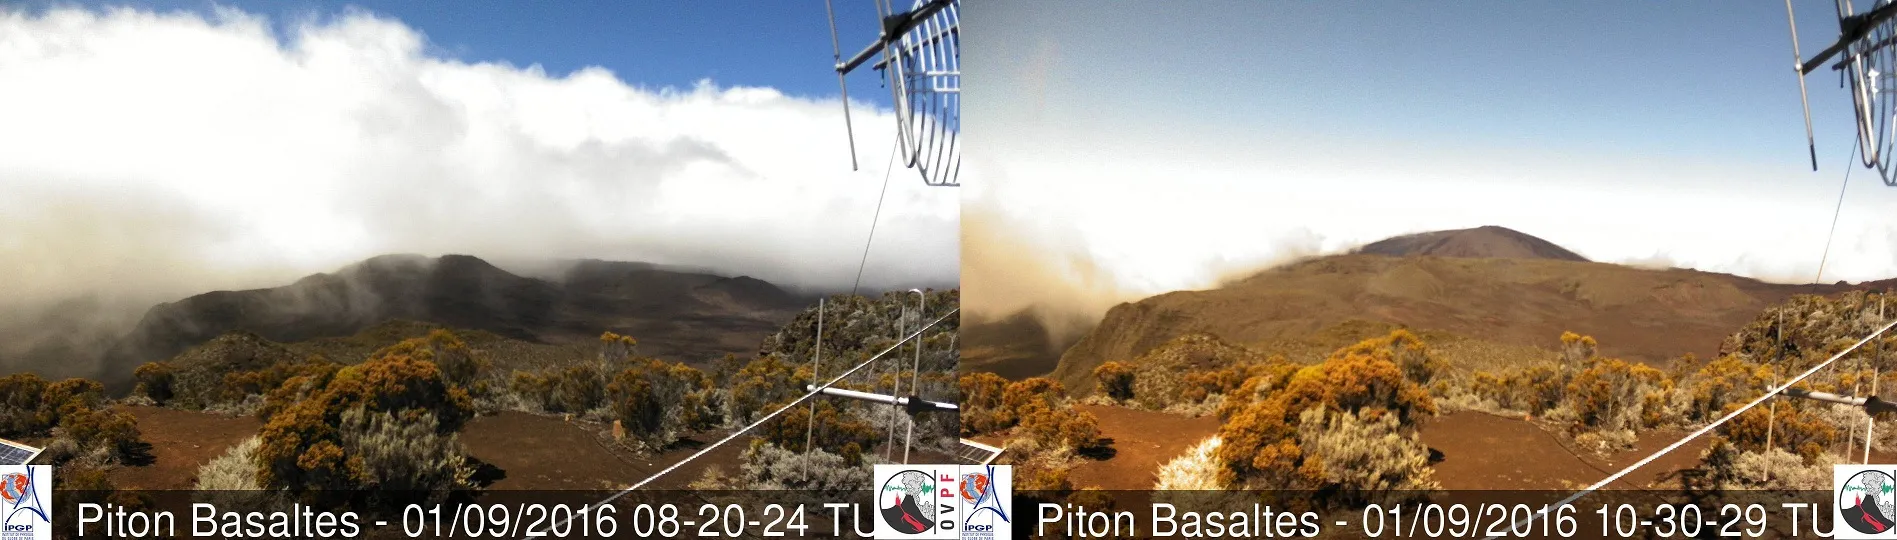 Annular solar eclipse 2016 Piton Basalte Reunion webcam comparison